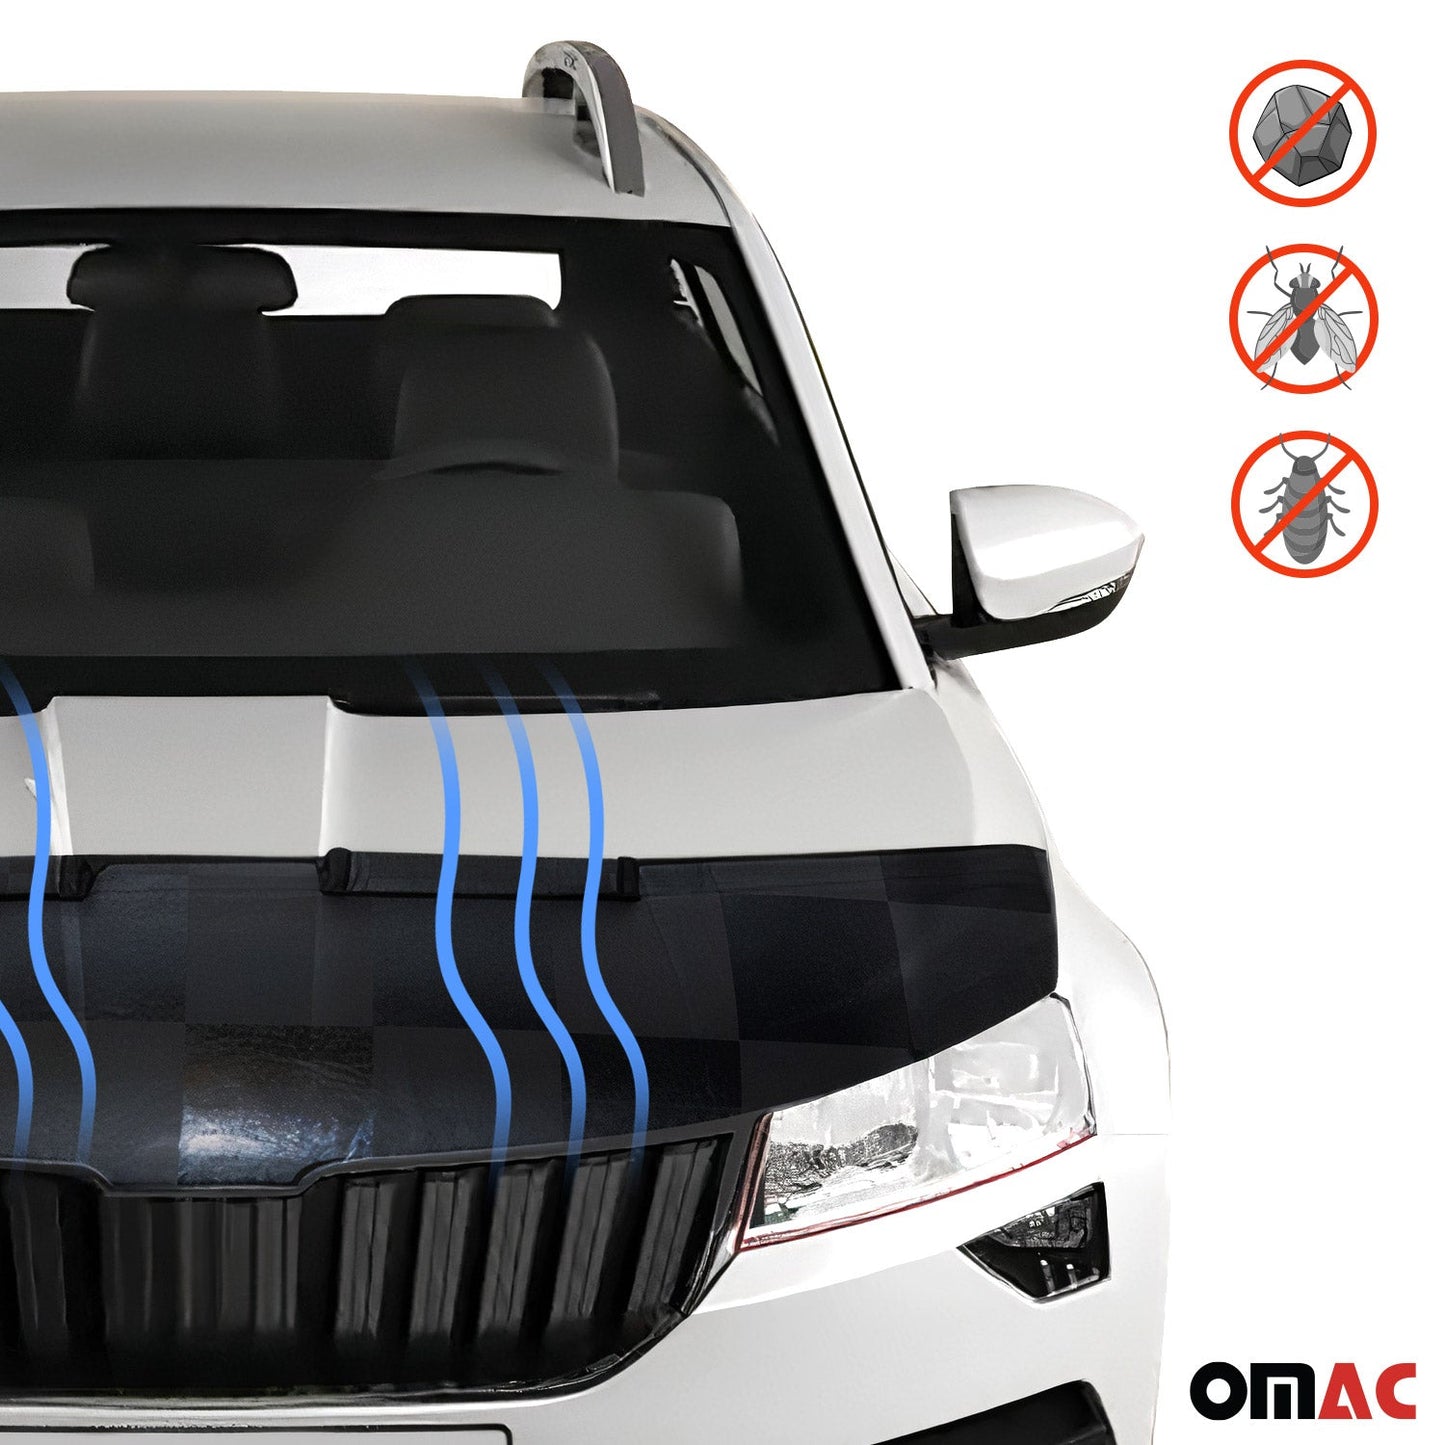 OMAC Car Bonnet Mask Hood Bra for Volkswagen Passat 2015-2019 Black Chequered 7545BSZ4CBG